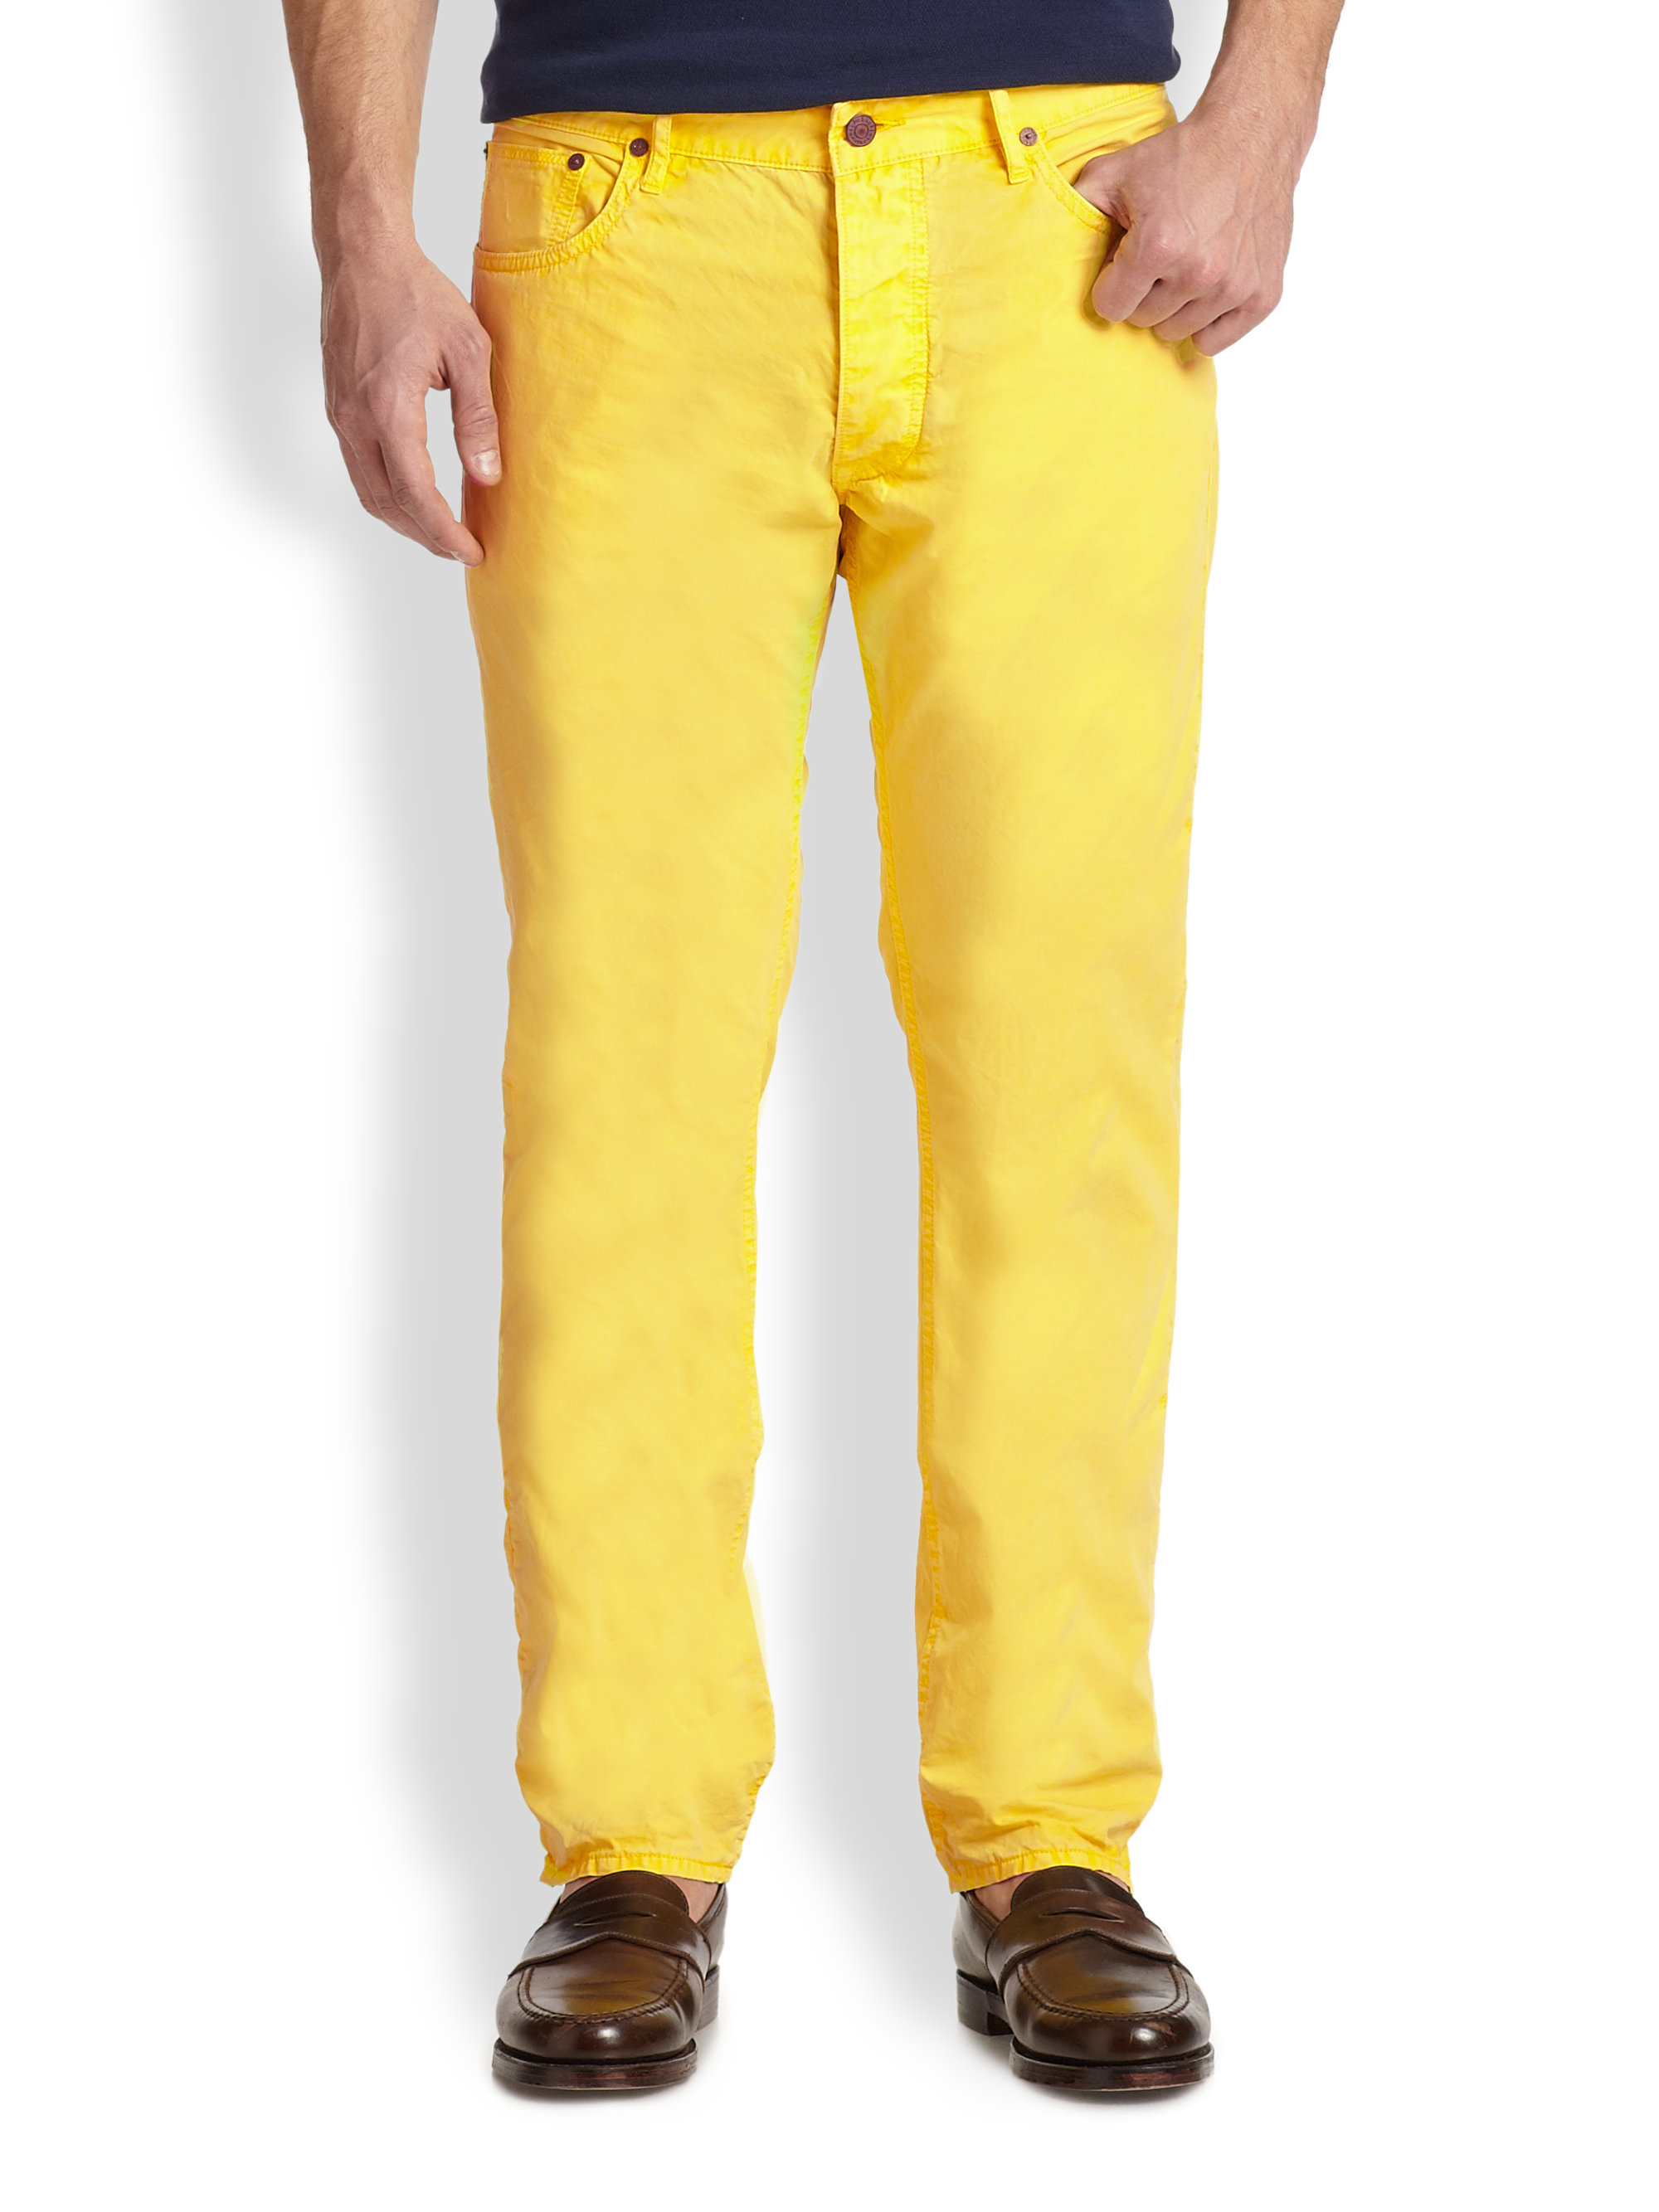 Polo Ralph Lauren Slim-Fit 5-Pocket Poplin Pants in Yellow for Men - Lyst